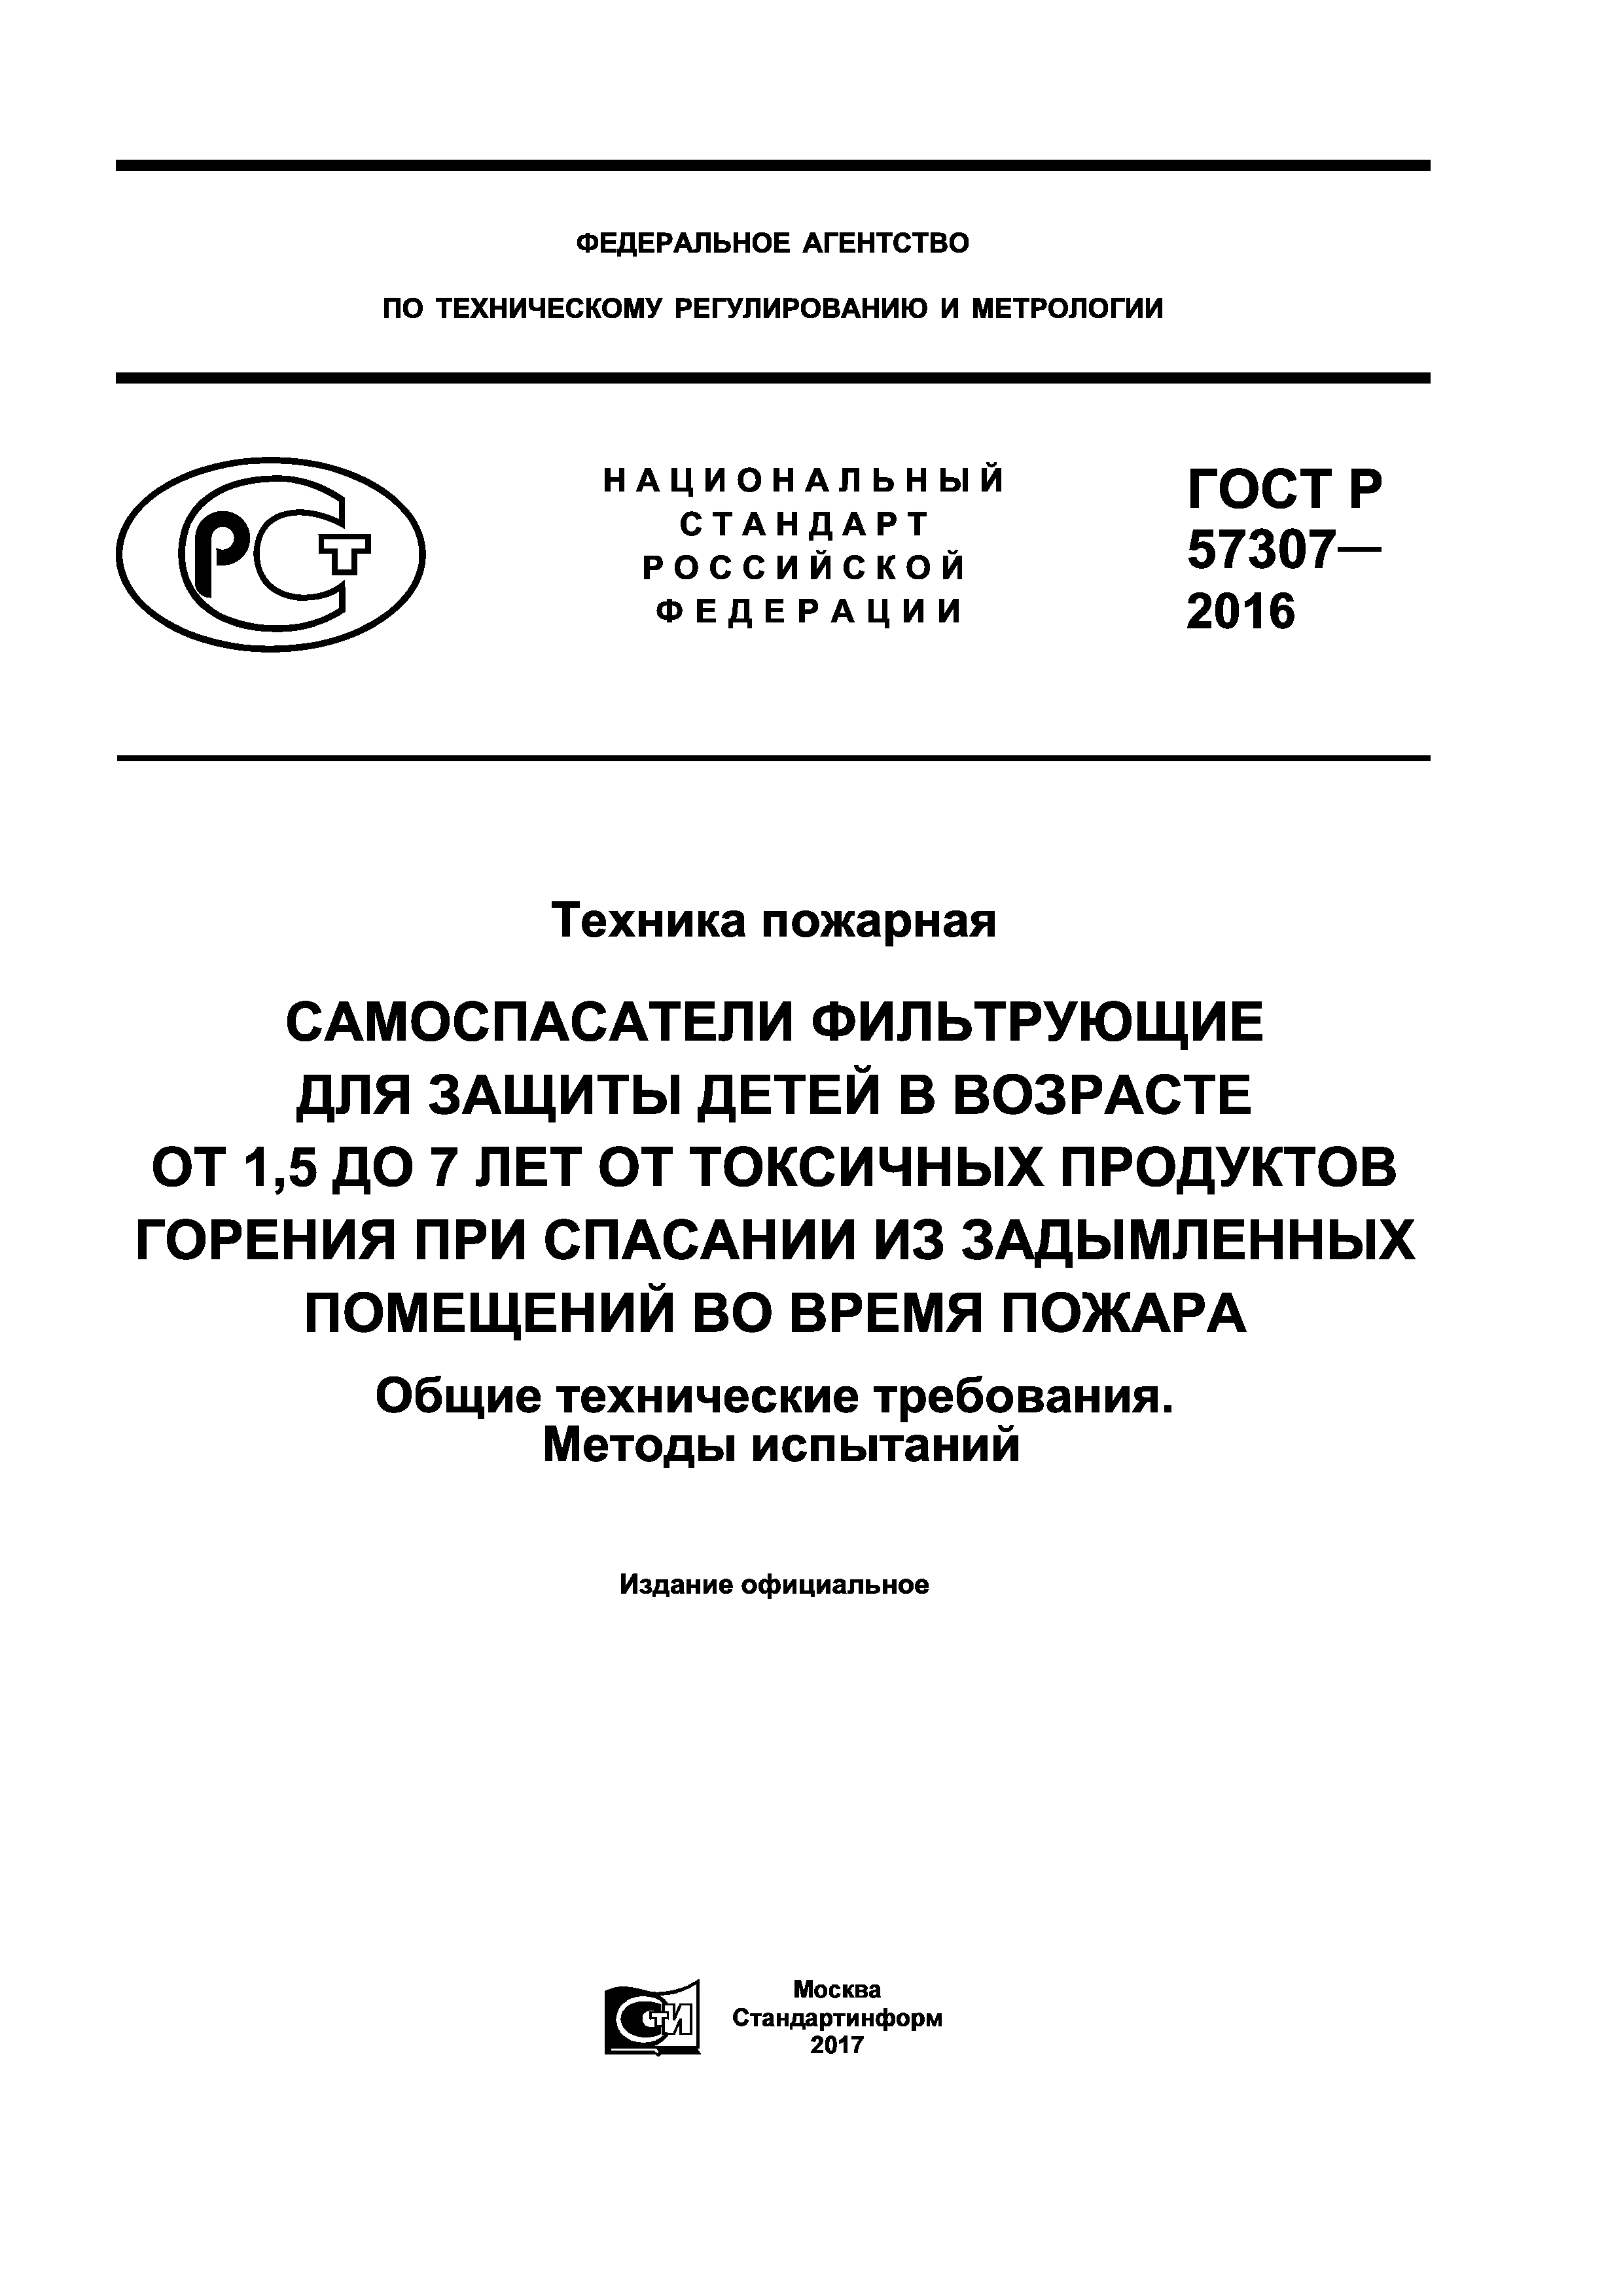 ГОСТ Р 57307-2016